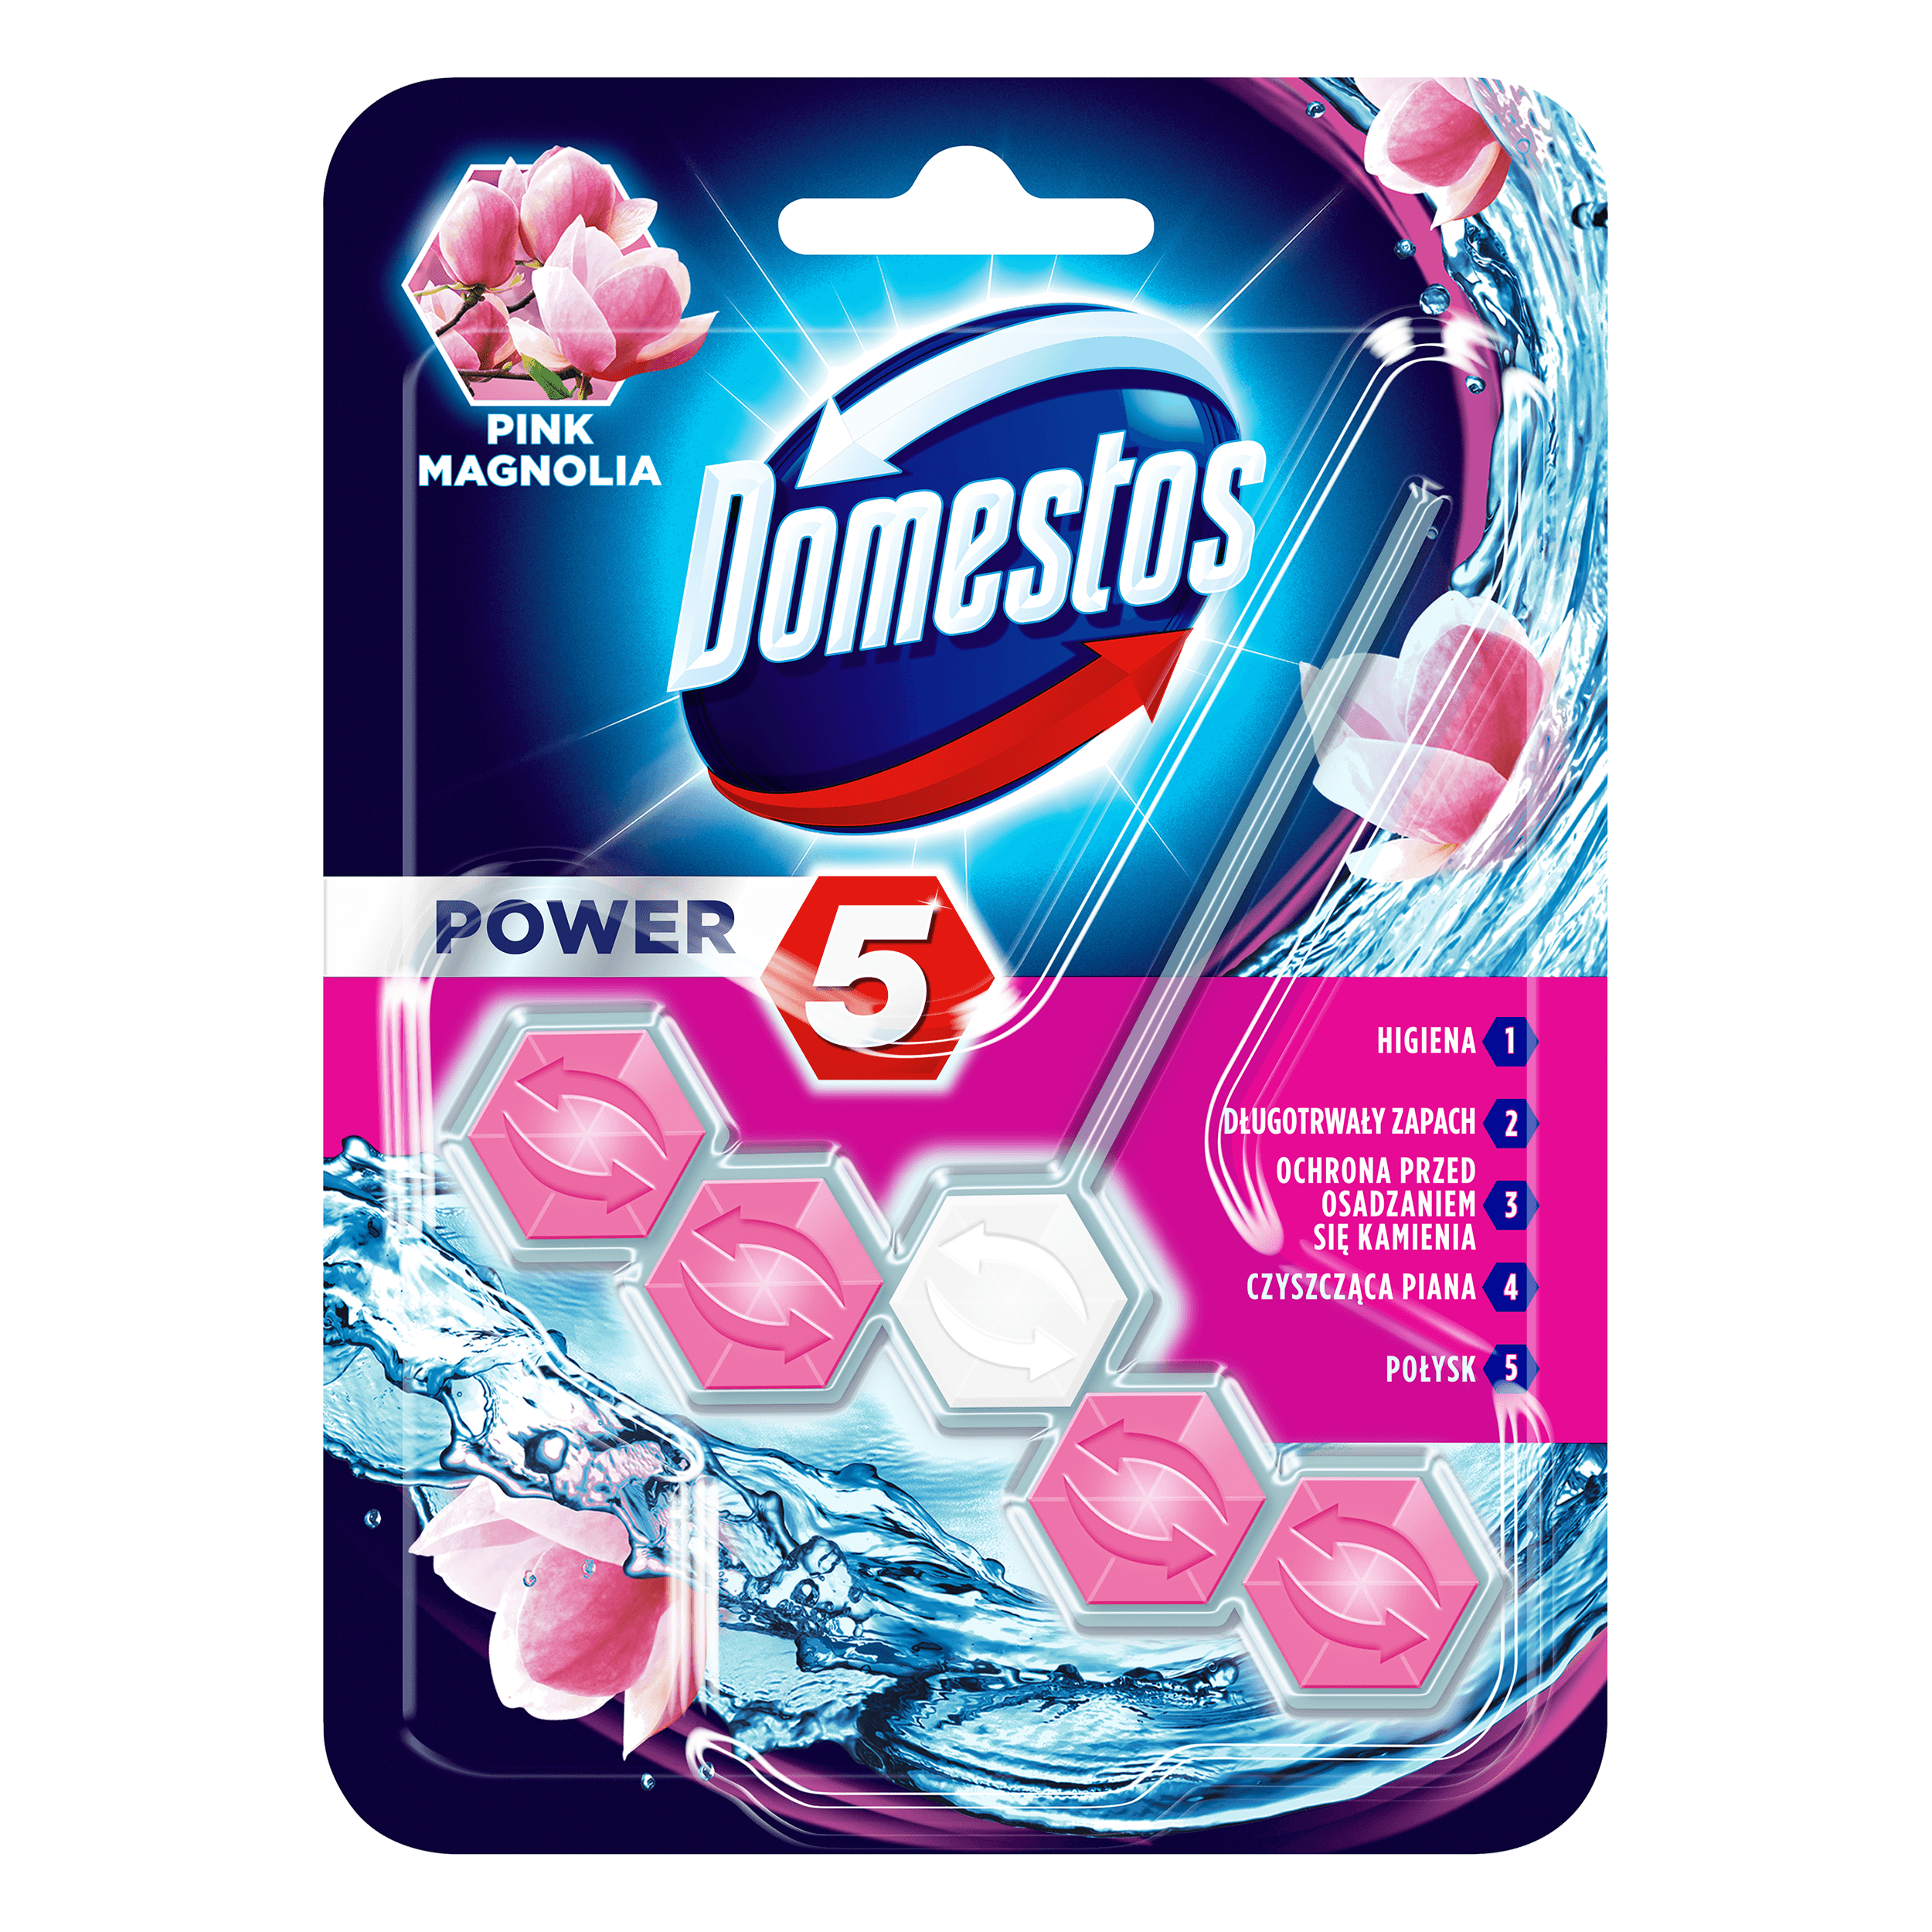 Kostka zapachowa do toalet Domestos Power5, 55g - Pink/Magnolia